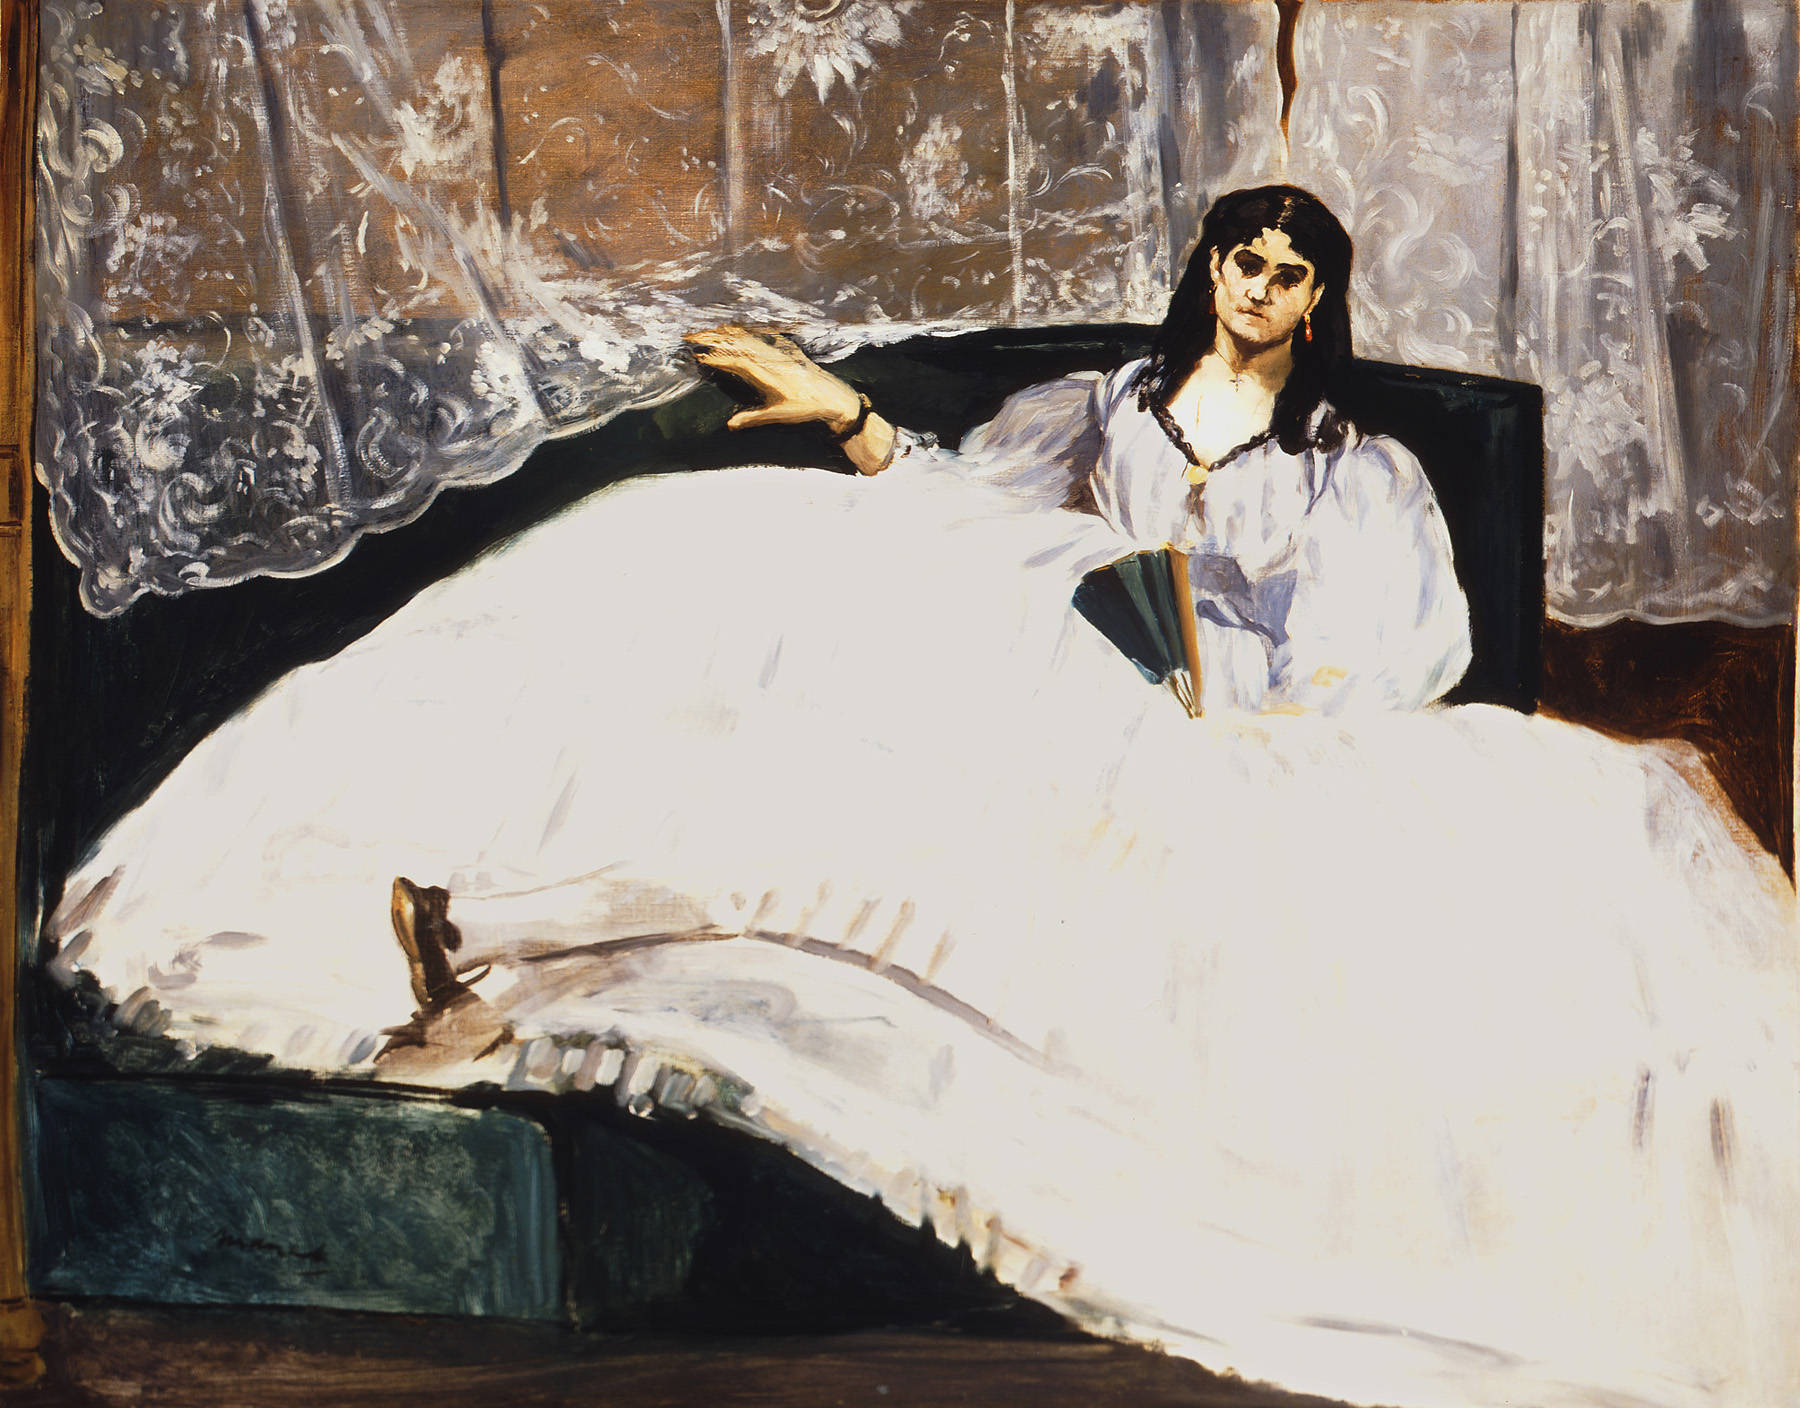 La amante de Baudelaire, reclinada by Édouard Manet - 1862 - 113 x 90 cm Szépművészeti MúzeumnameSzépművészeti Múzeum